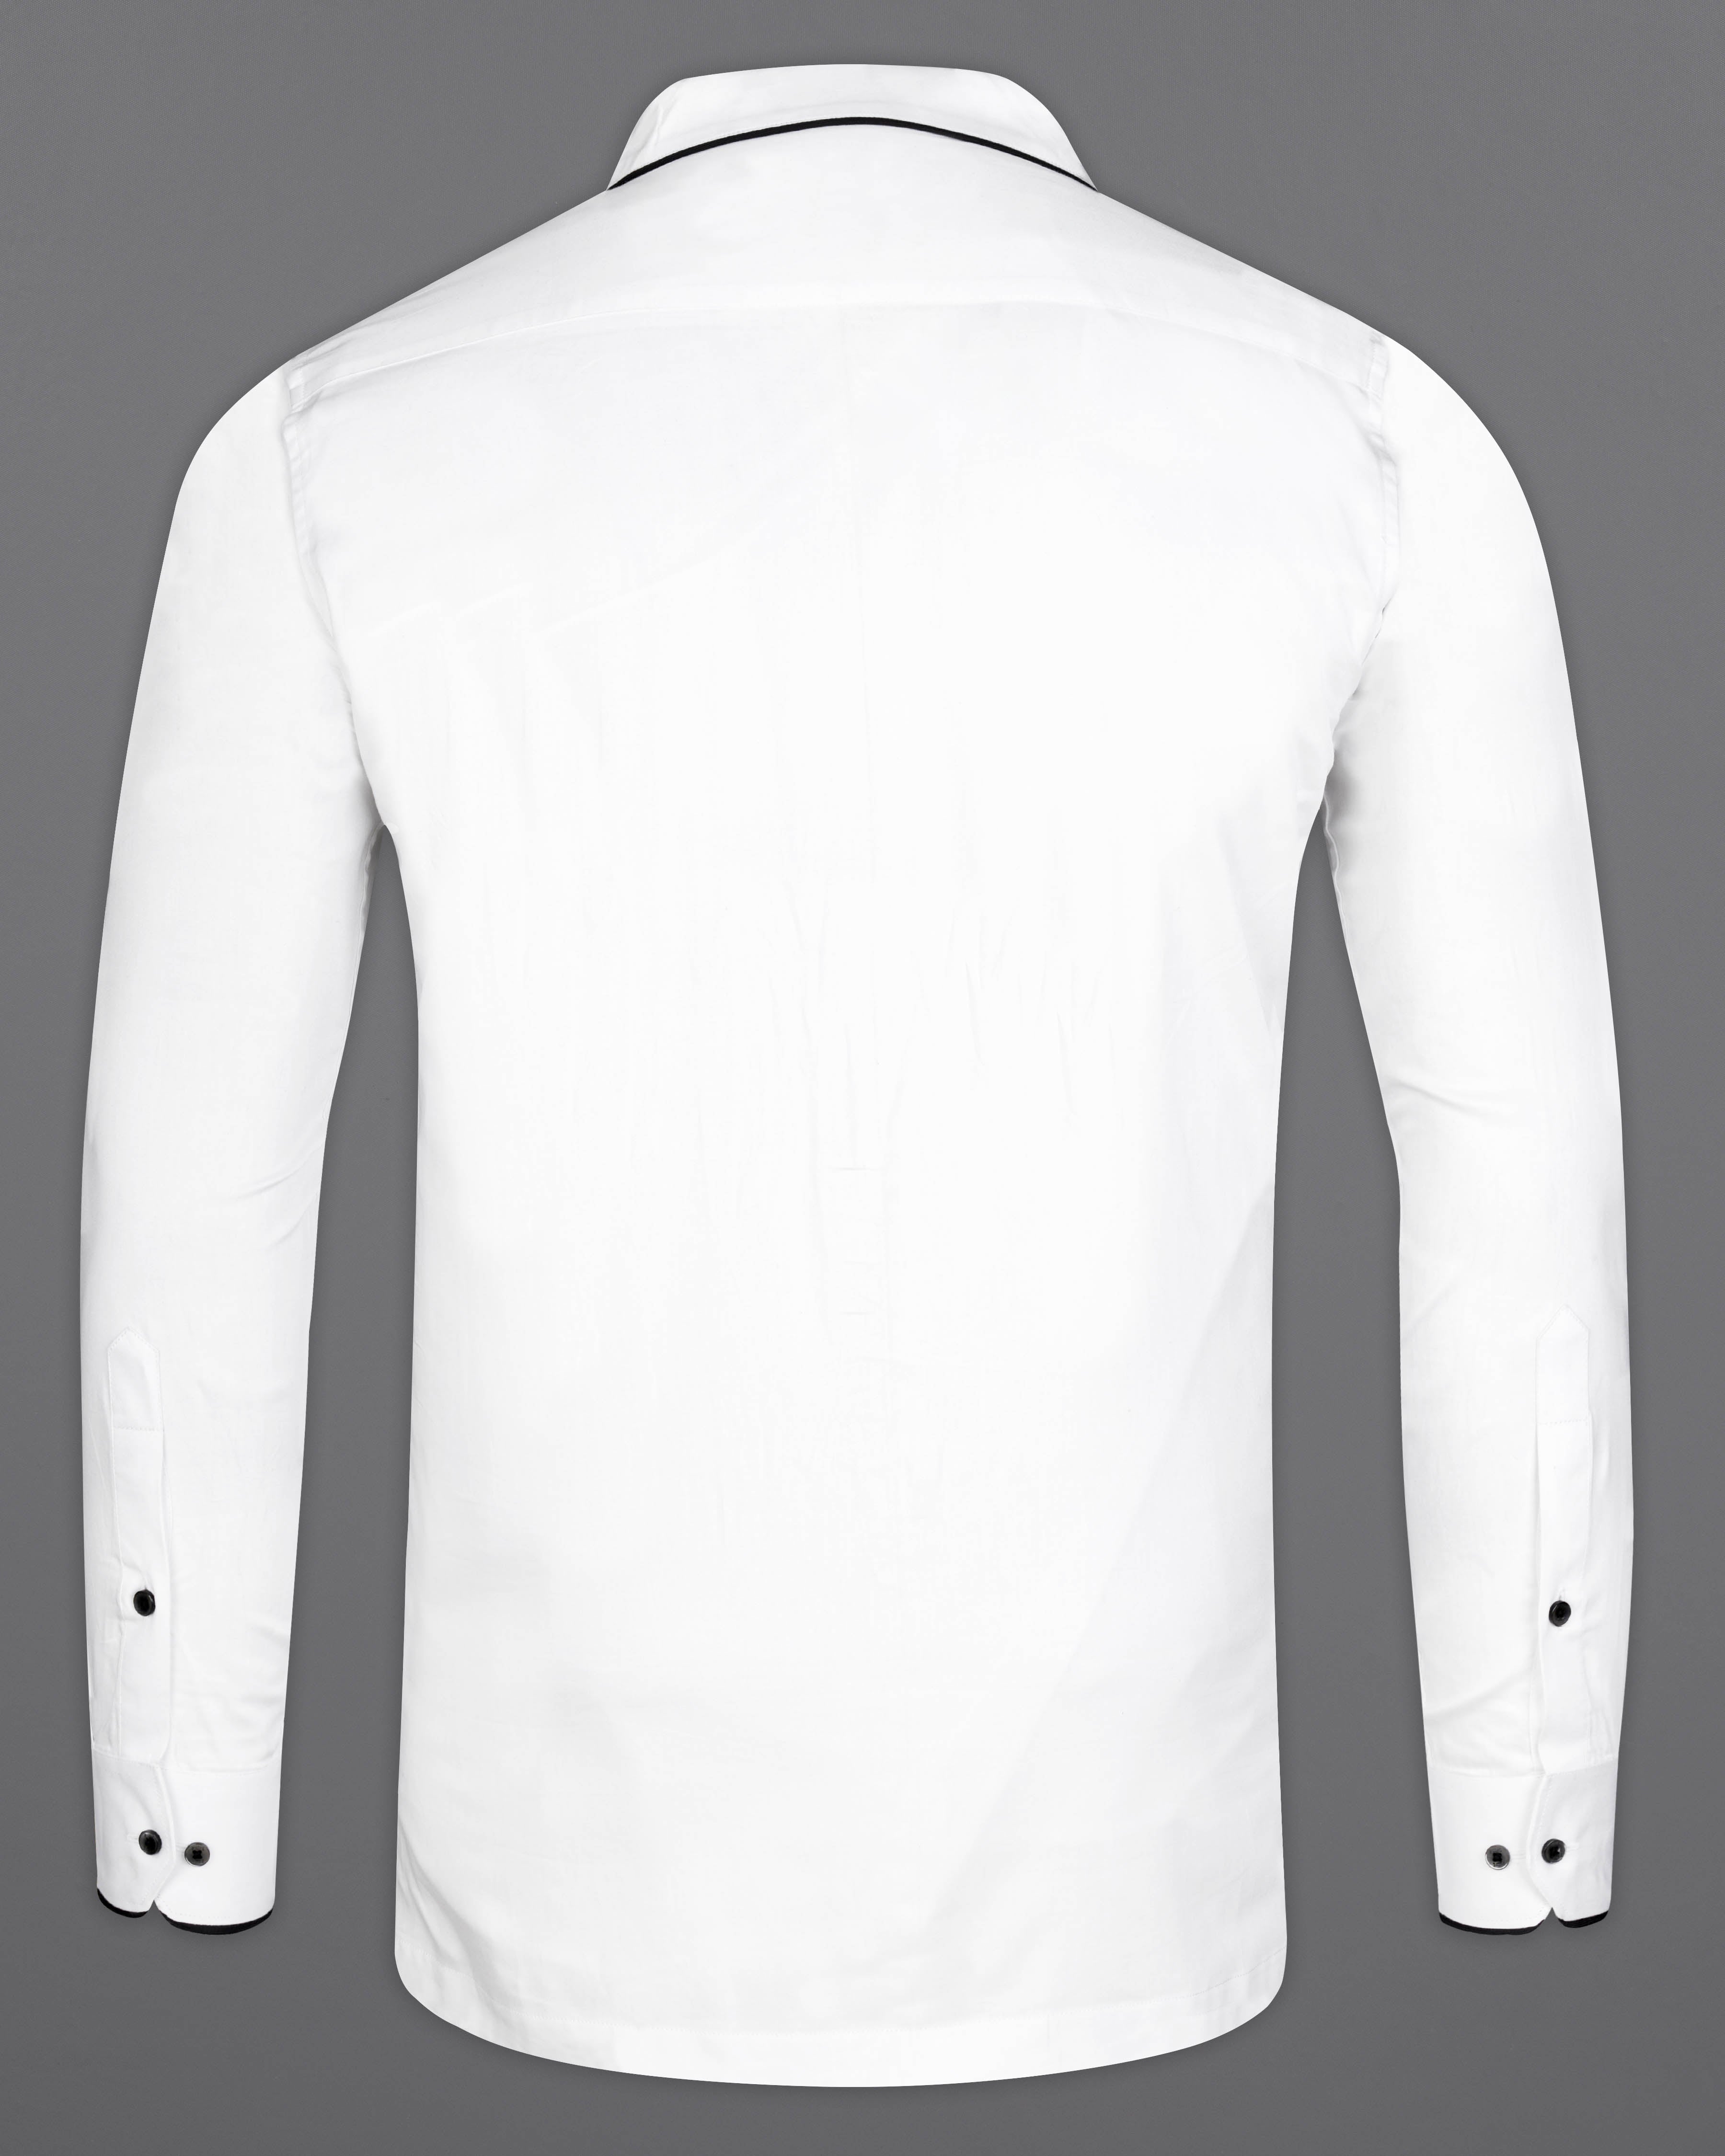 Bright White with Black Piping Work Super Soft Premium Cotton Designer Shirt 9551-CC-BLK-P485-38,9551-CC-BLK-P485-H-38,9551-CC-BLK-P485-39,9551-CC-BLK-P485-H-39,9551-CC-BLK-P485-40,9551-CC-BLK-P485-H-40,9551-CC-BLK-P485-42,9551-CC-BLK-P485-H-42,9551-CC-BLK-P485-44,9551-CC-BLK-P485-H-44,9551-CC-BLK-P485-46,9551-CC-BLK-P485-H-46,9551-CC-BLK-P485-48,9551-CC-BLK-P485-H-48,9551-CC-BLK-P485-50,9551-CC-BLK-P485-H-50,9551-CC-BLK-P485-52,9551-CC-BLK-P485-H-52